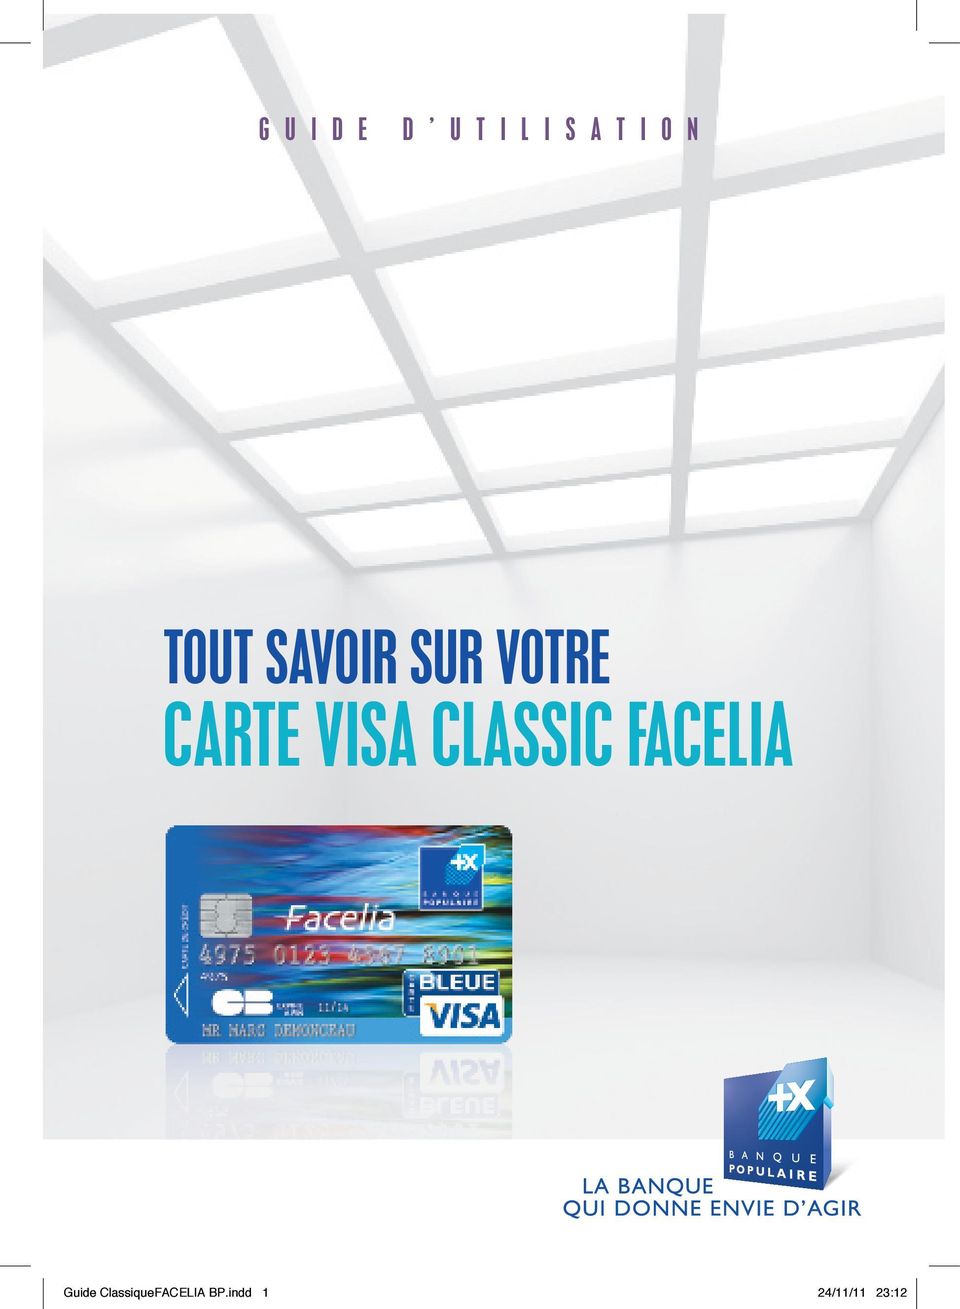 CarTe visa ClassiC FaCelia - PDF Free Download